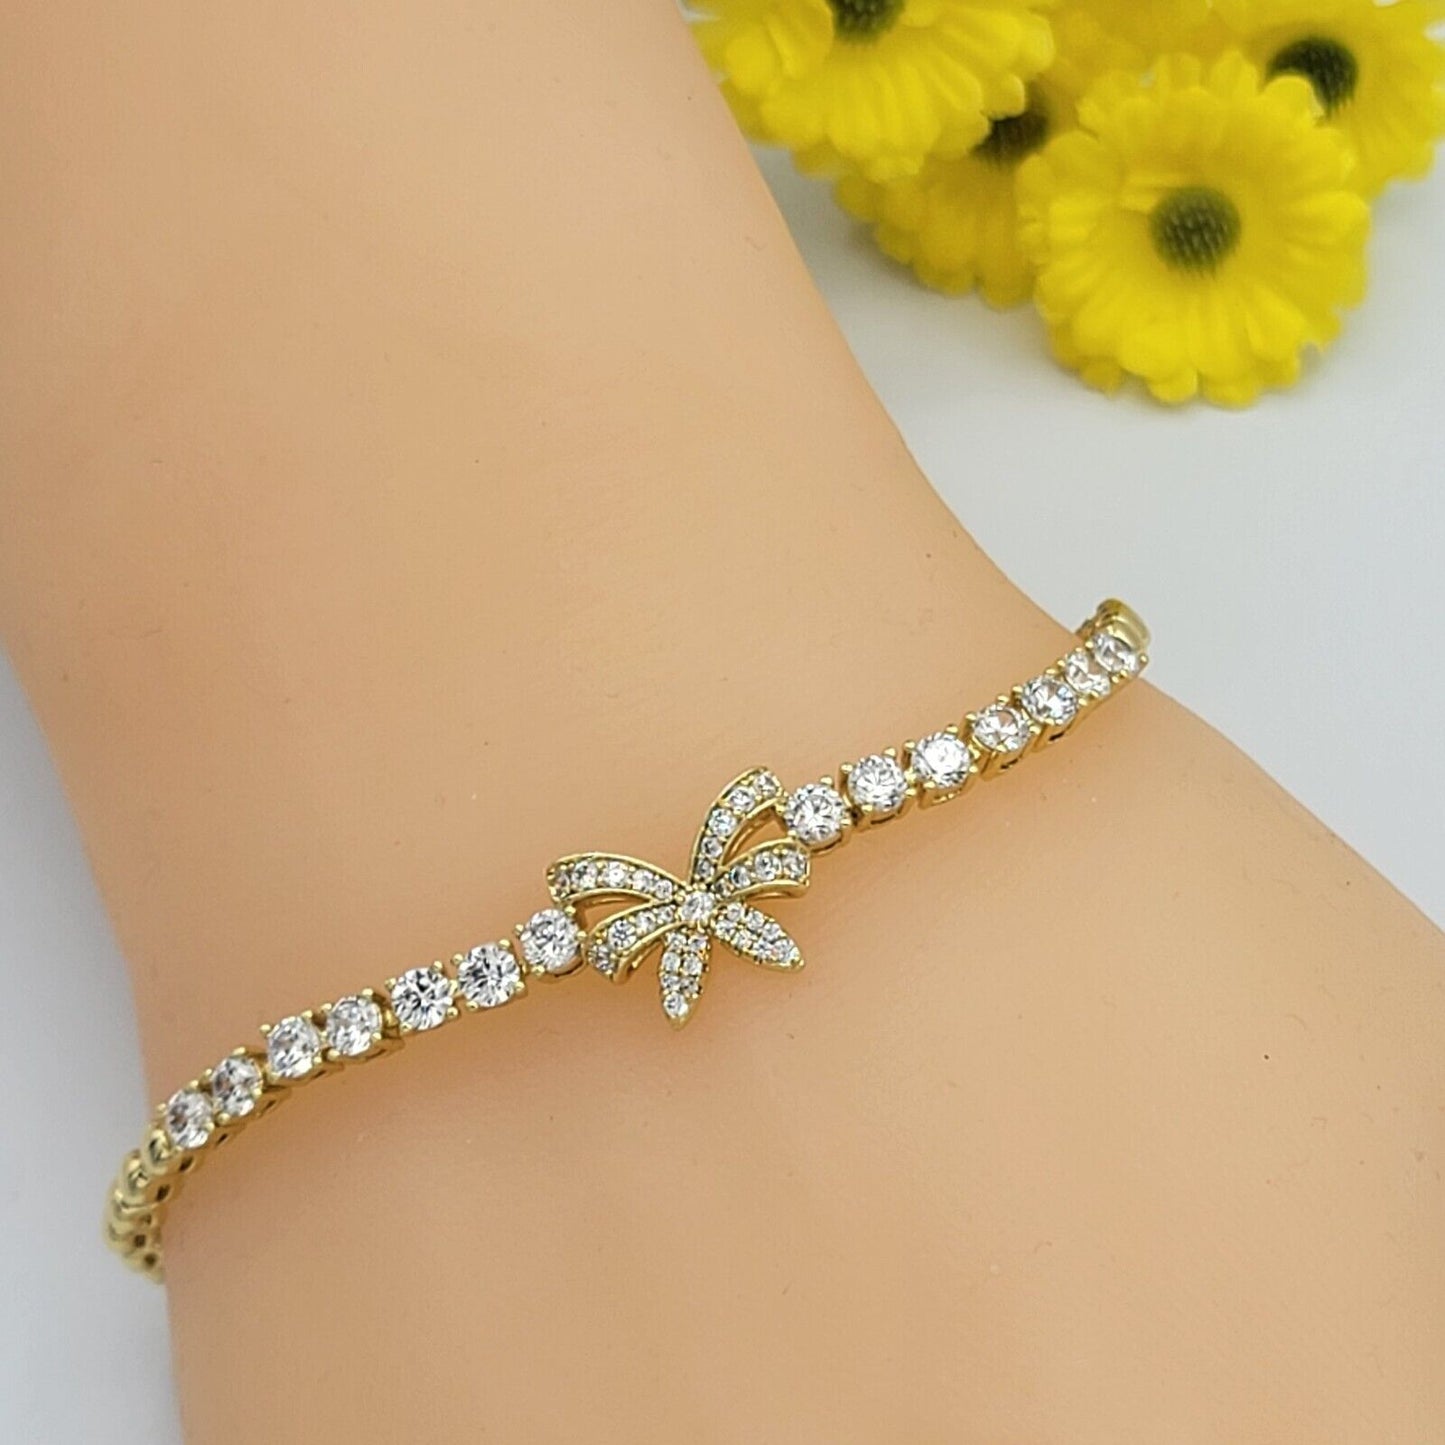 Bracelets - 14K Gold Plated. Clear Crystals Bow Gift Bracelet. Cute Elegant